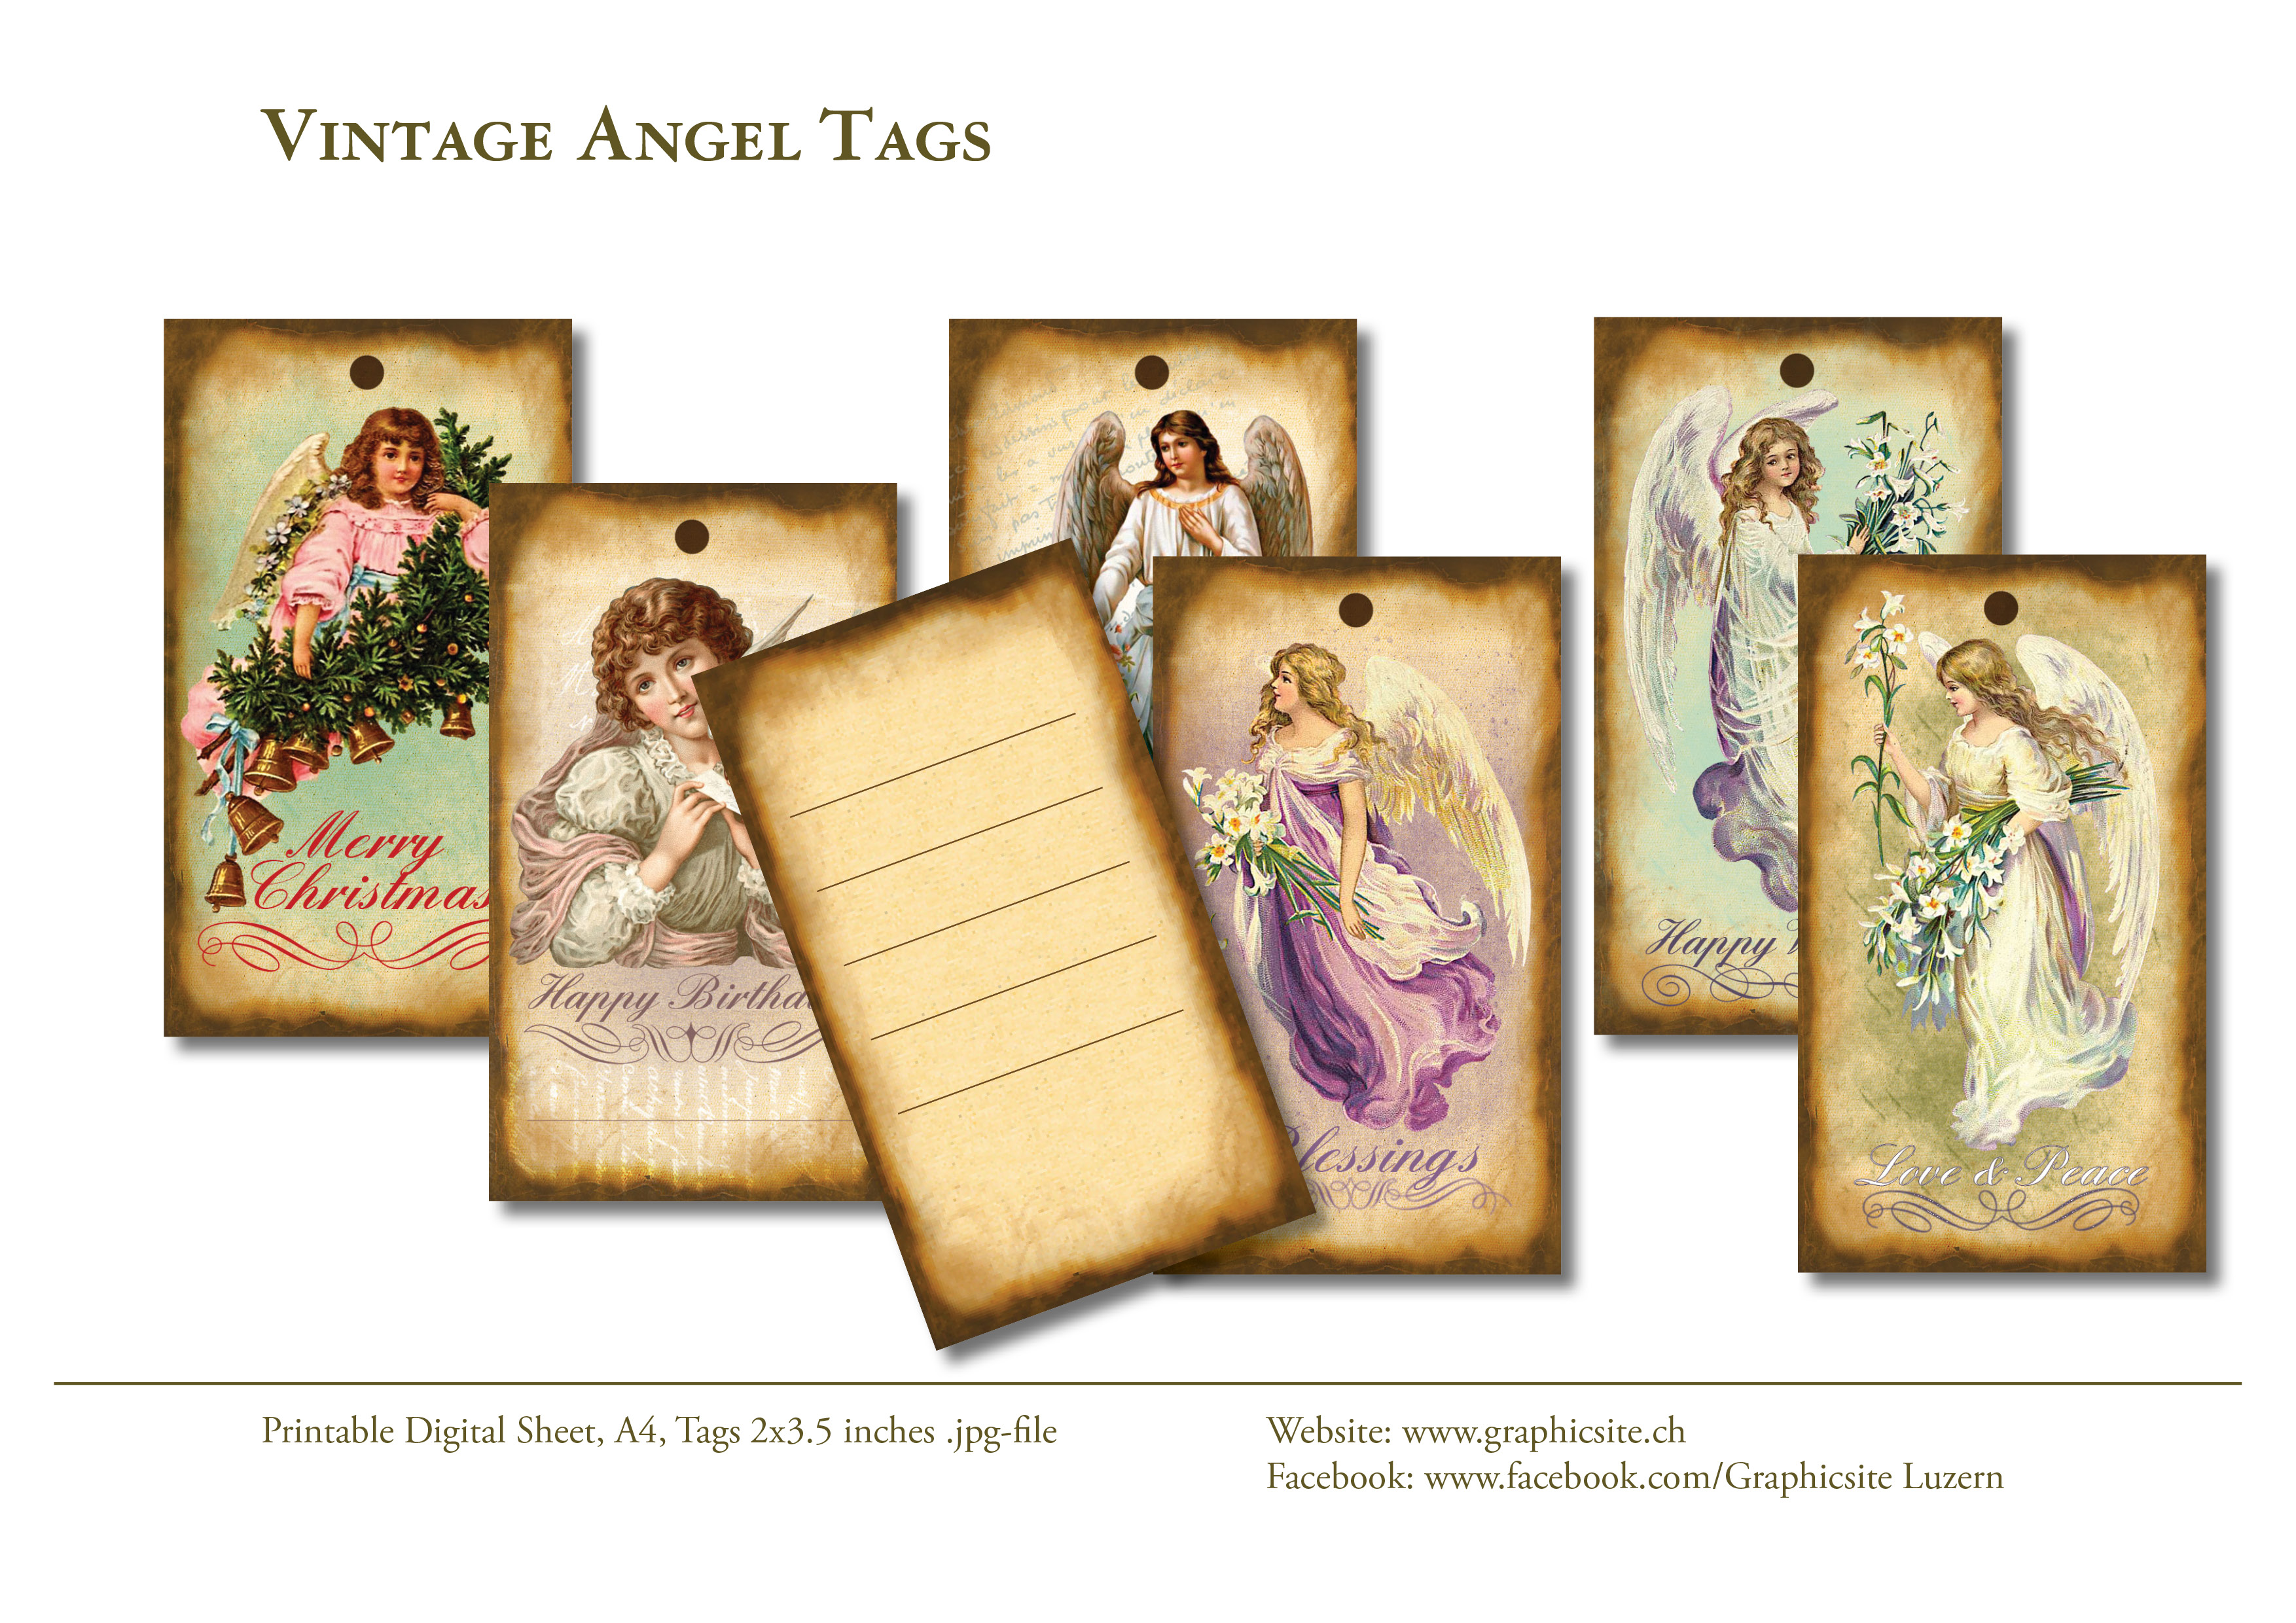 Printable Digital Sheets - Tags - VintageAngel Tags - #gifttags, #producttags, #vintage, #angels, 